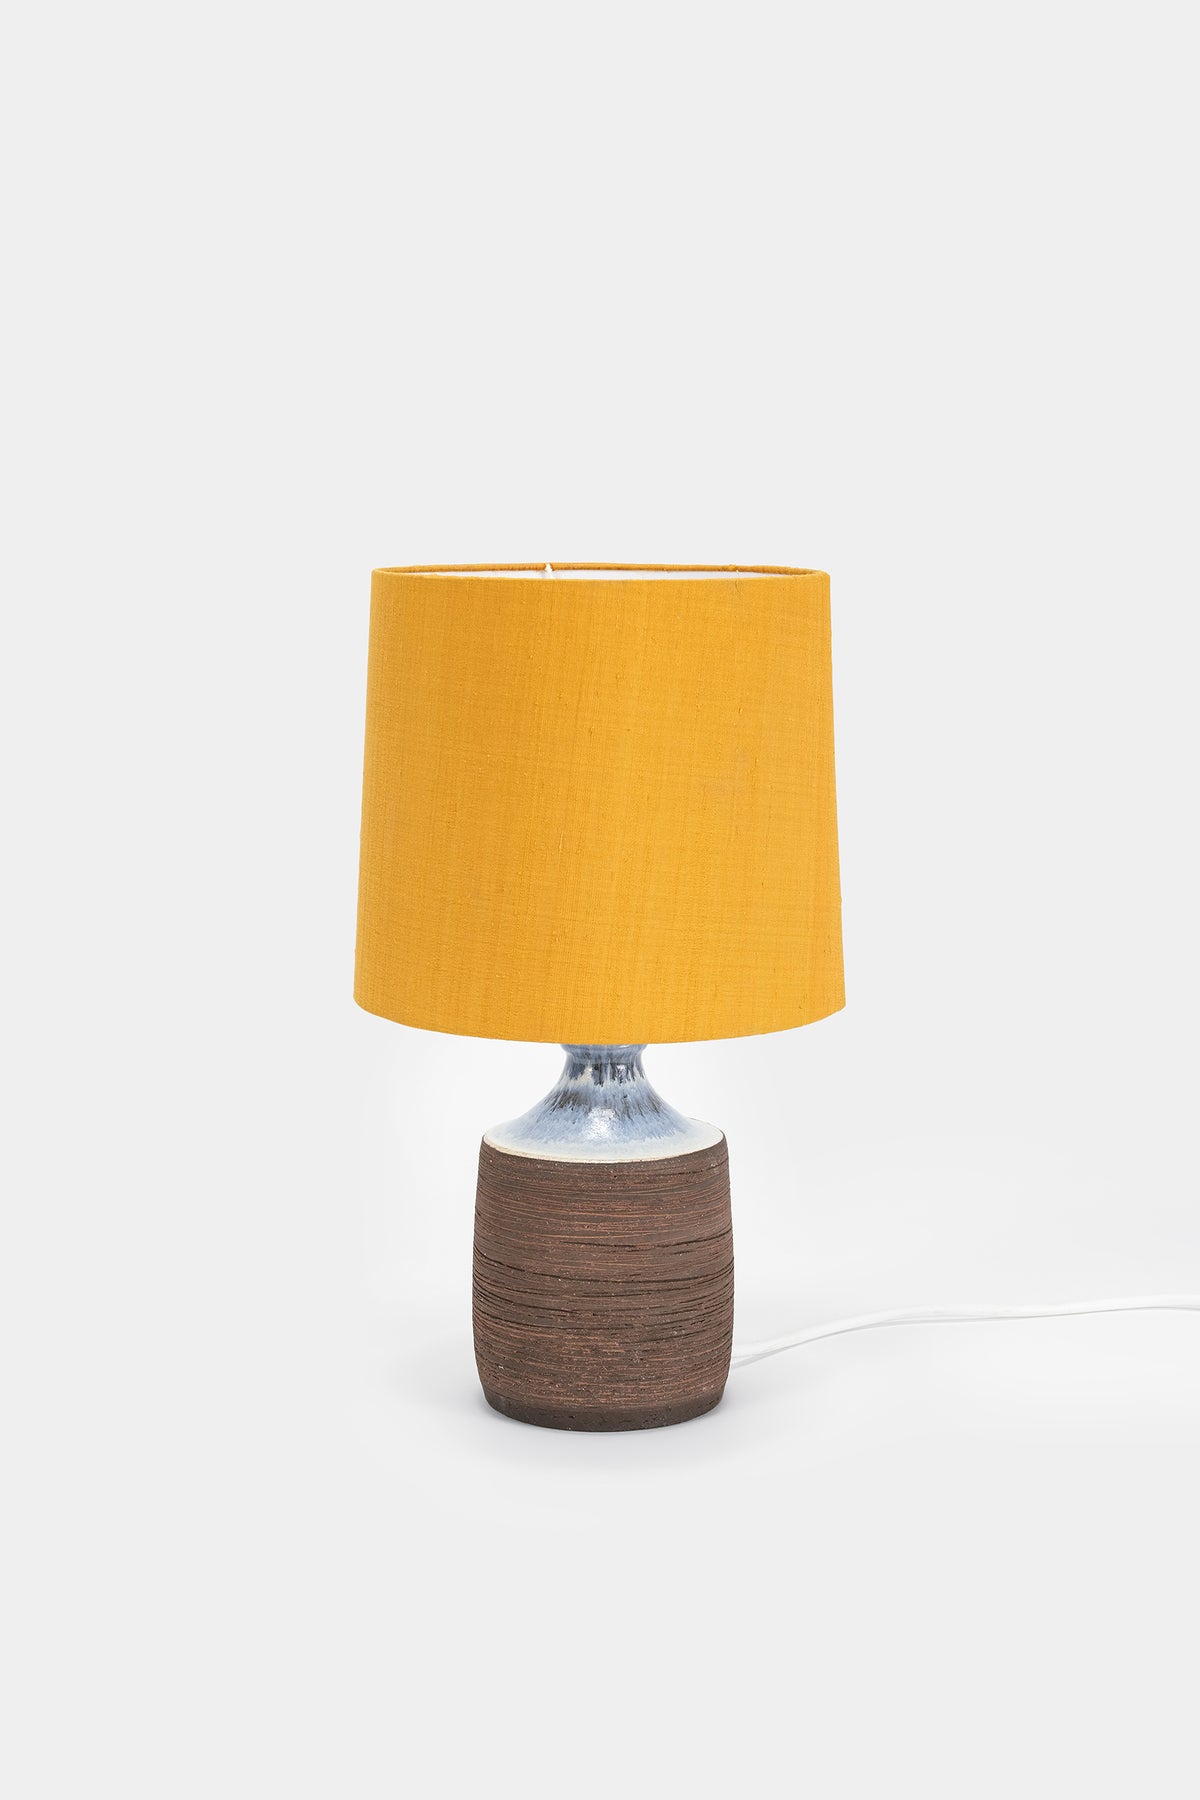 Table Lamp, Hyllested, Denmark, 60s